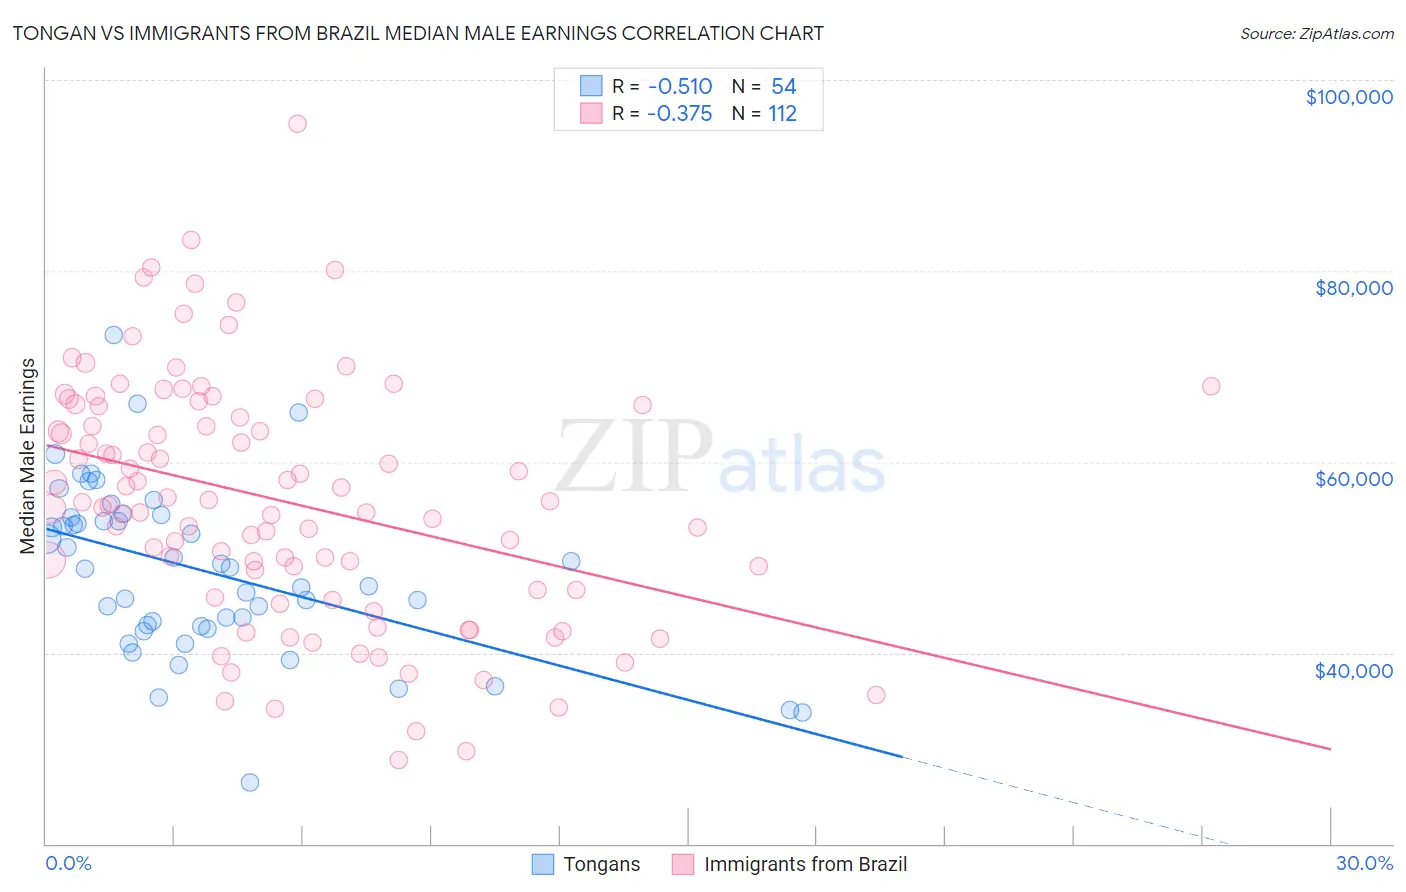 Tongan vs Immigrants from Brazil Median Male Earnings